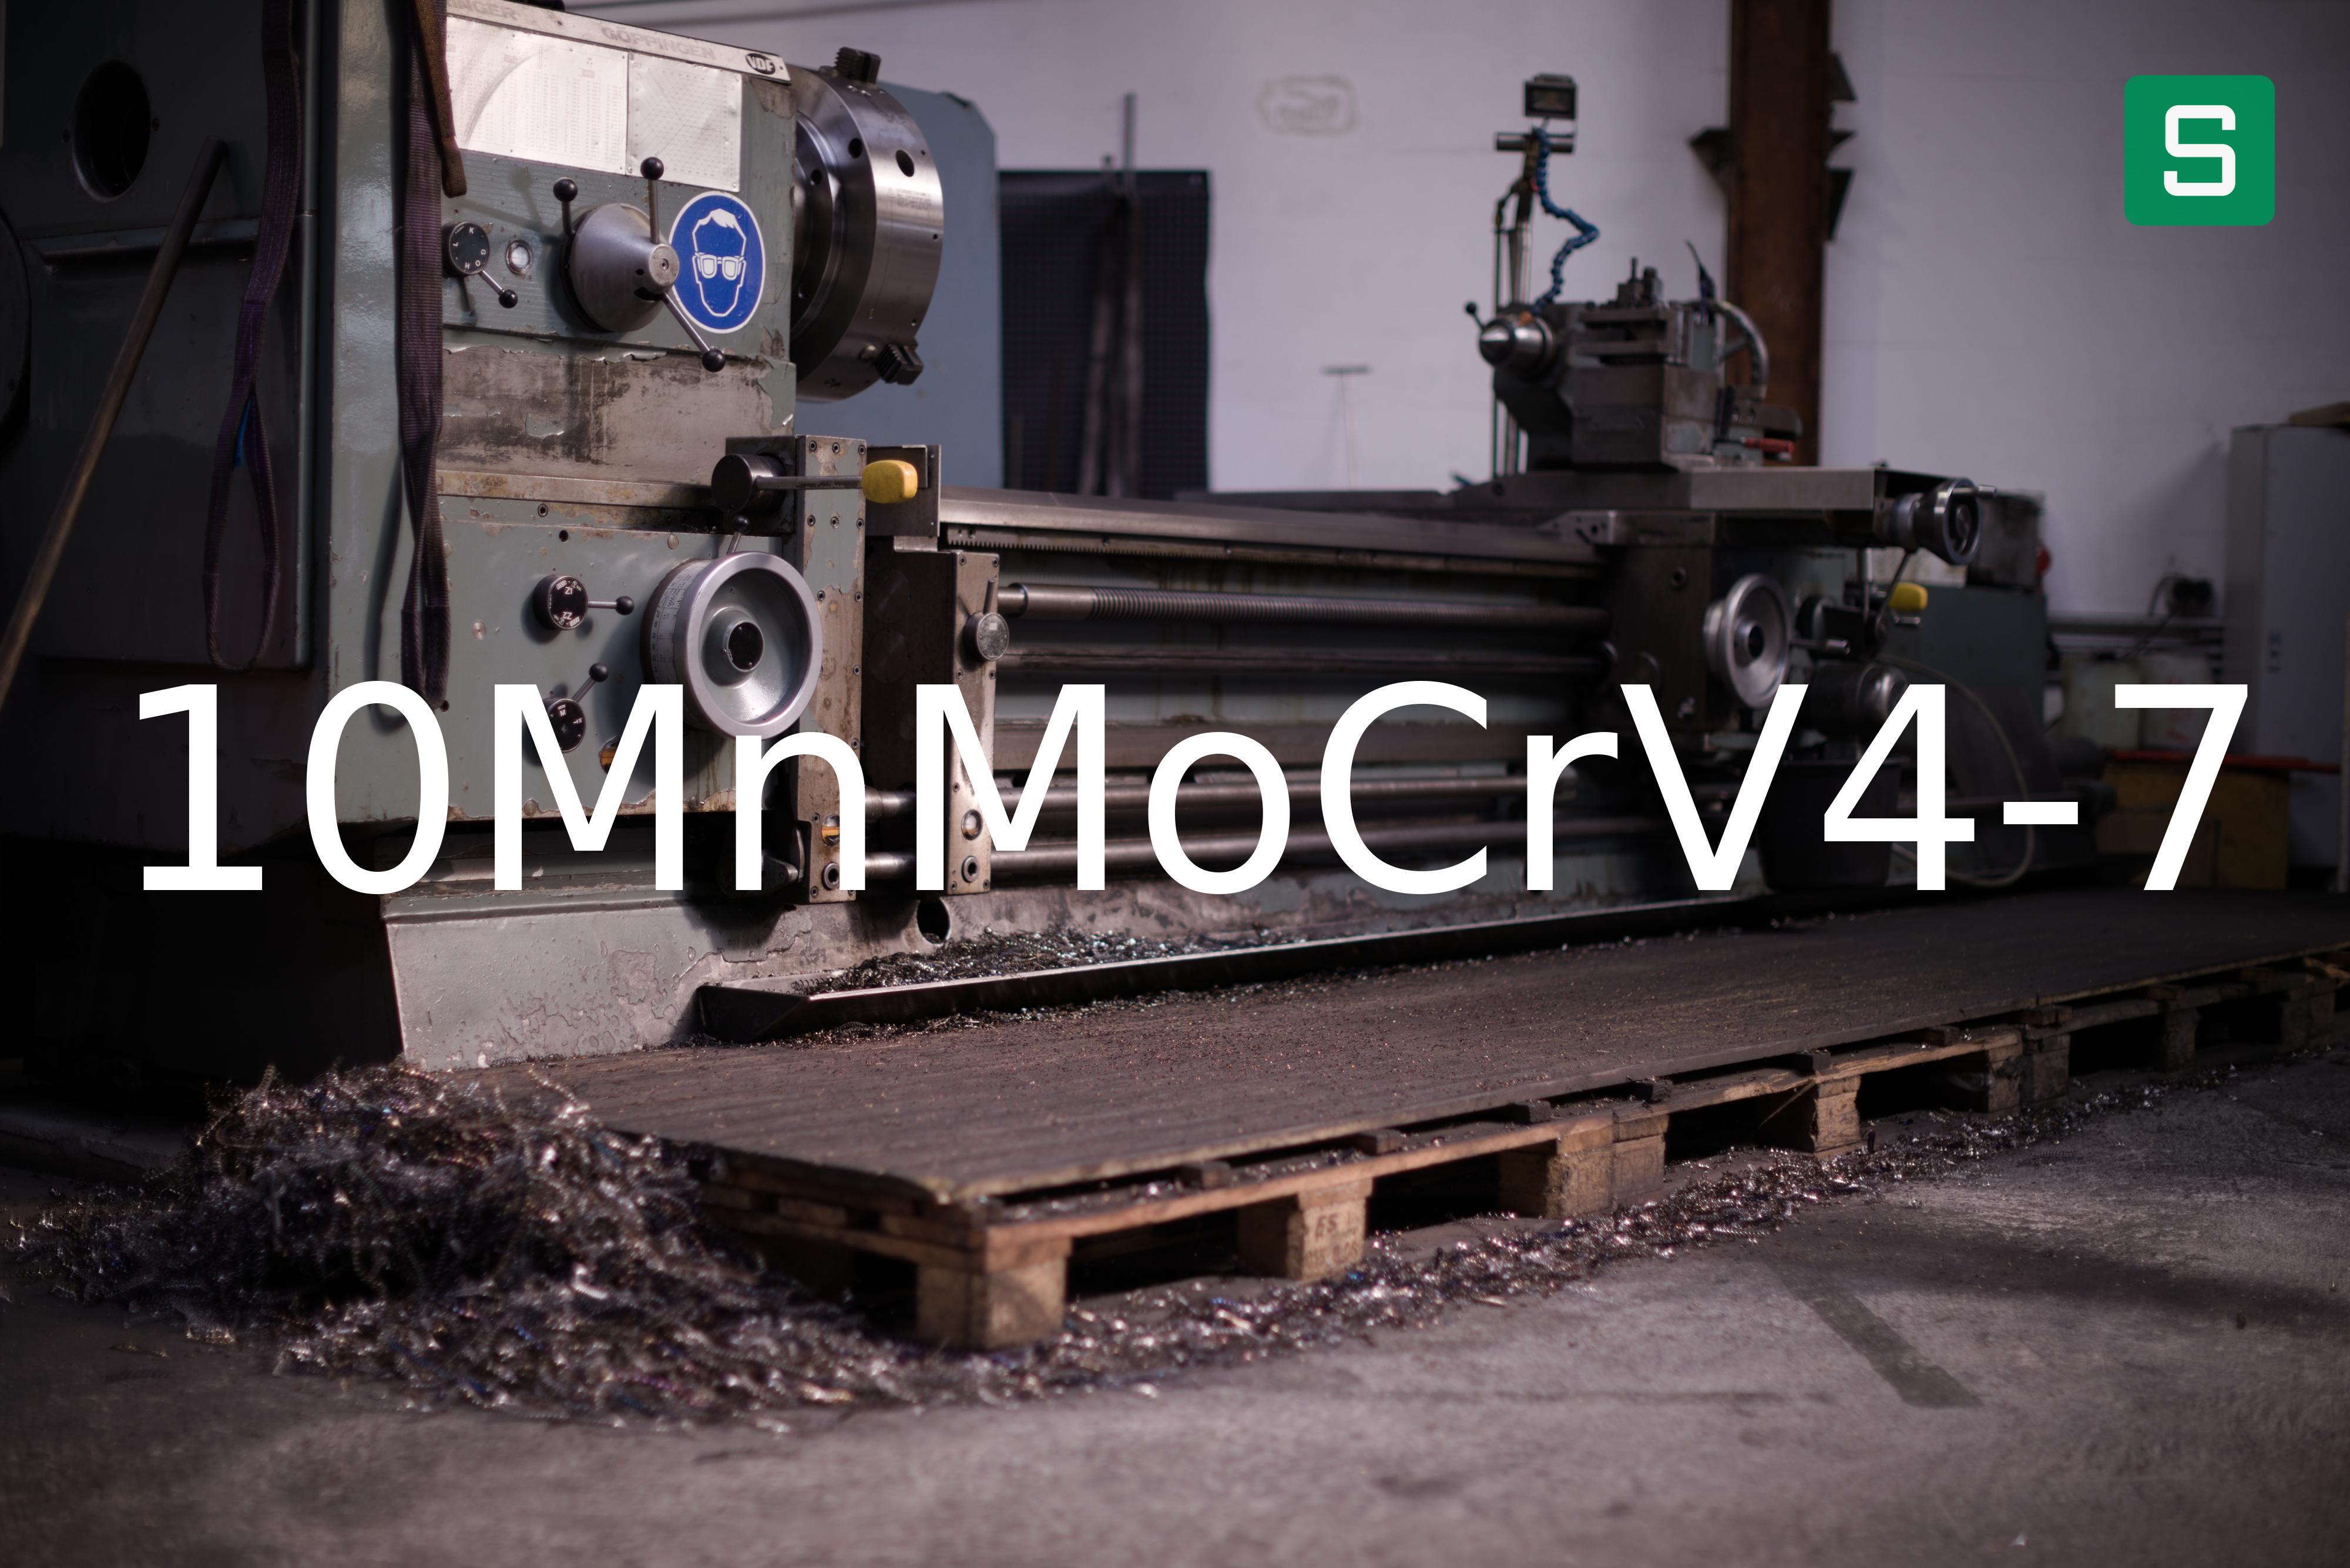 Steel Material: 10MnMoCrV4-7